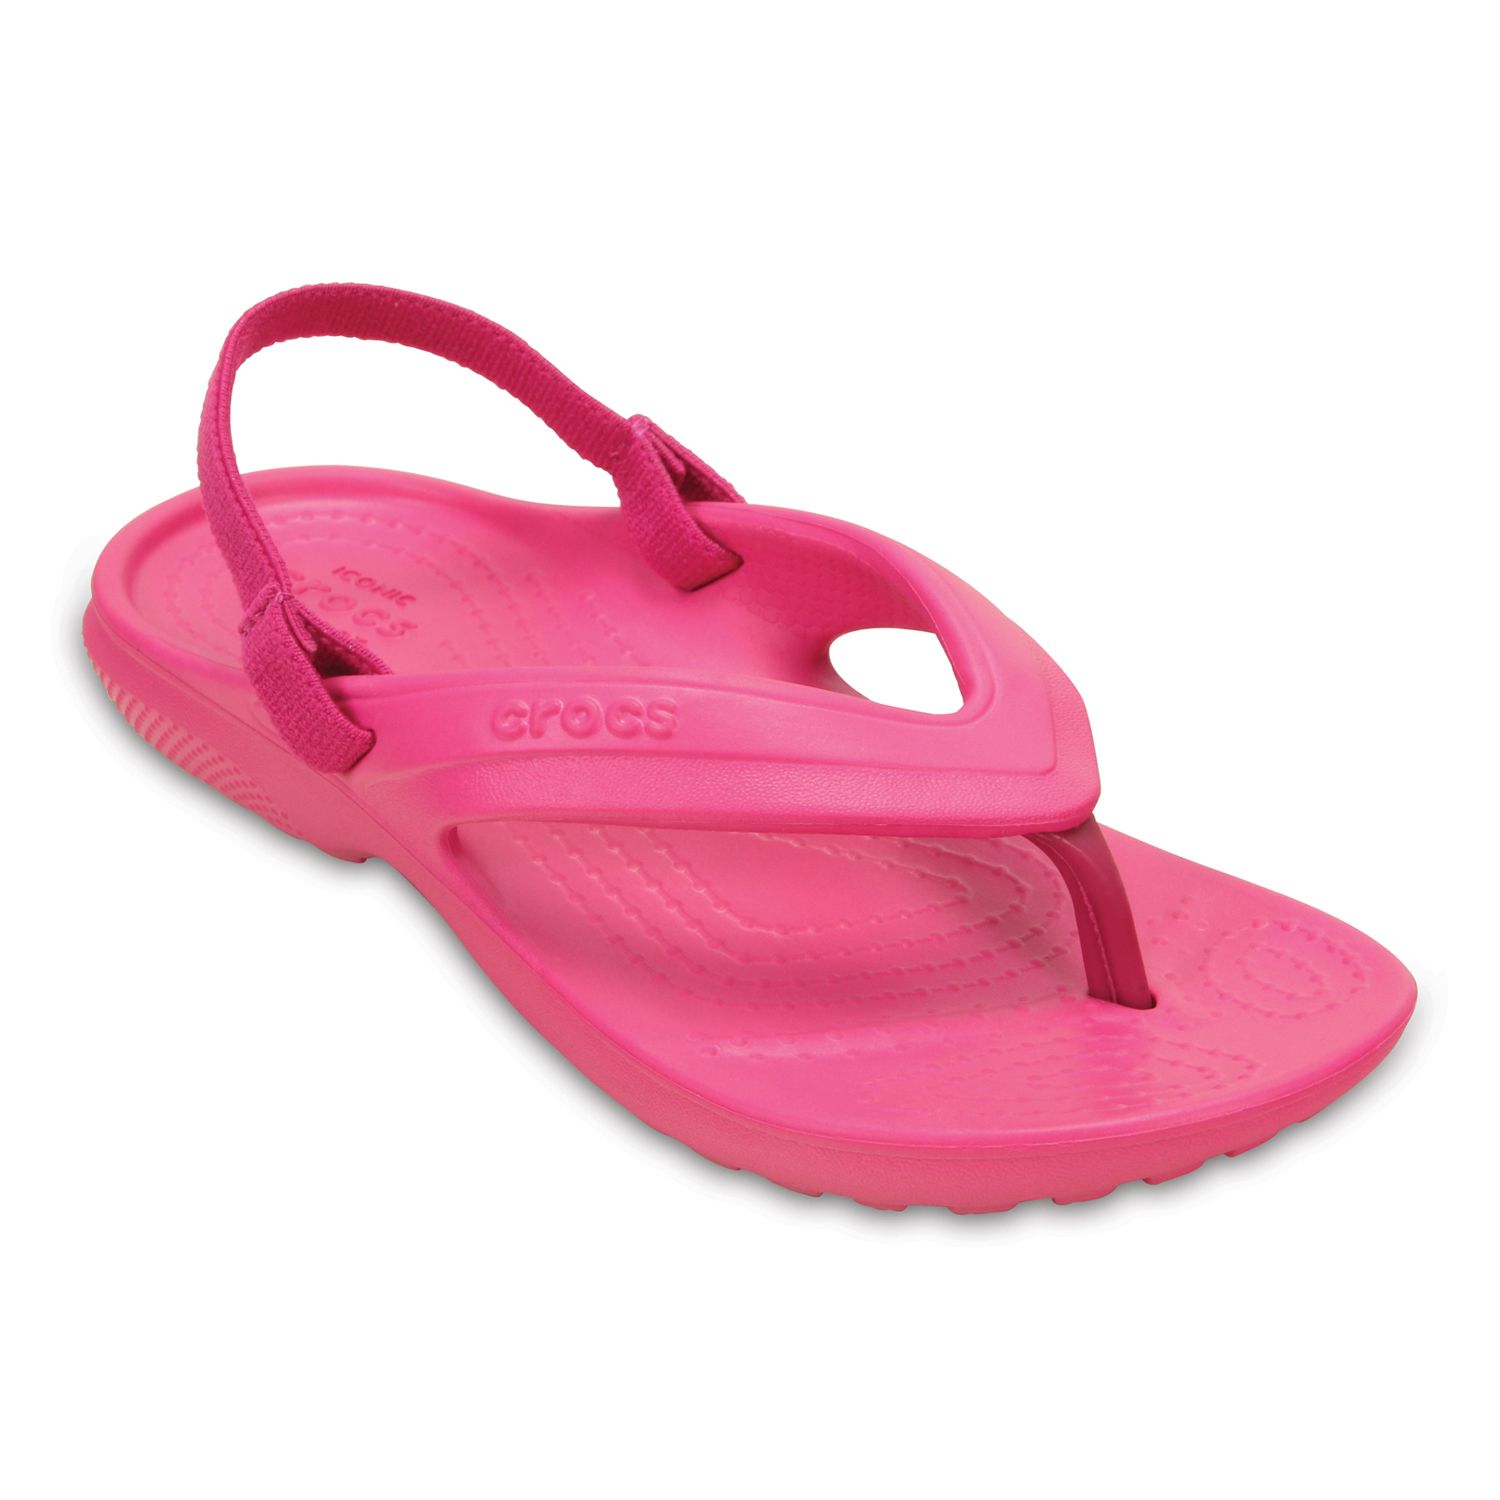 crocs sandals for girls